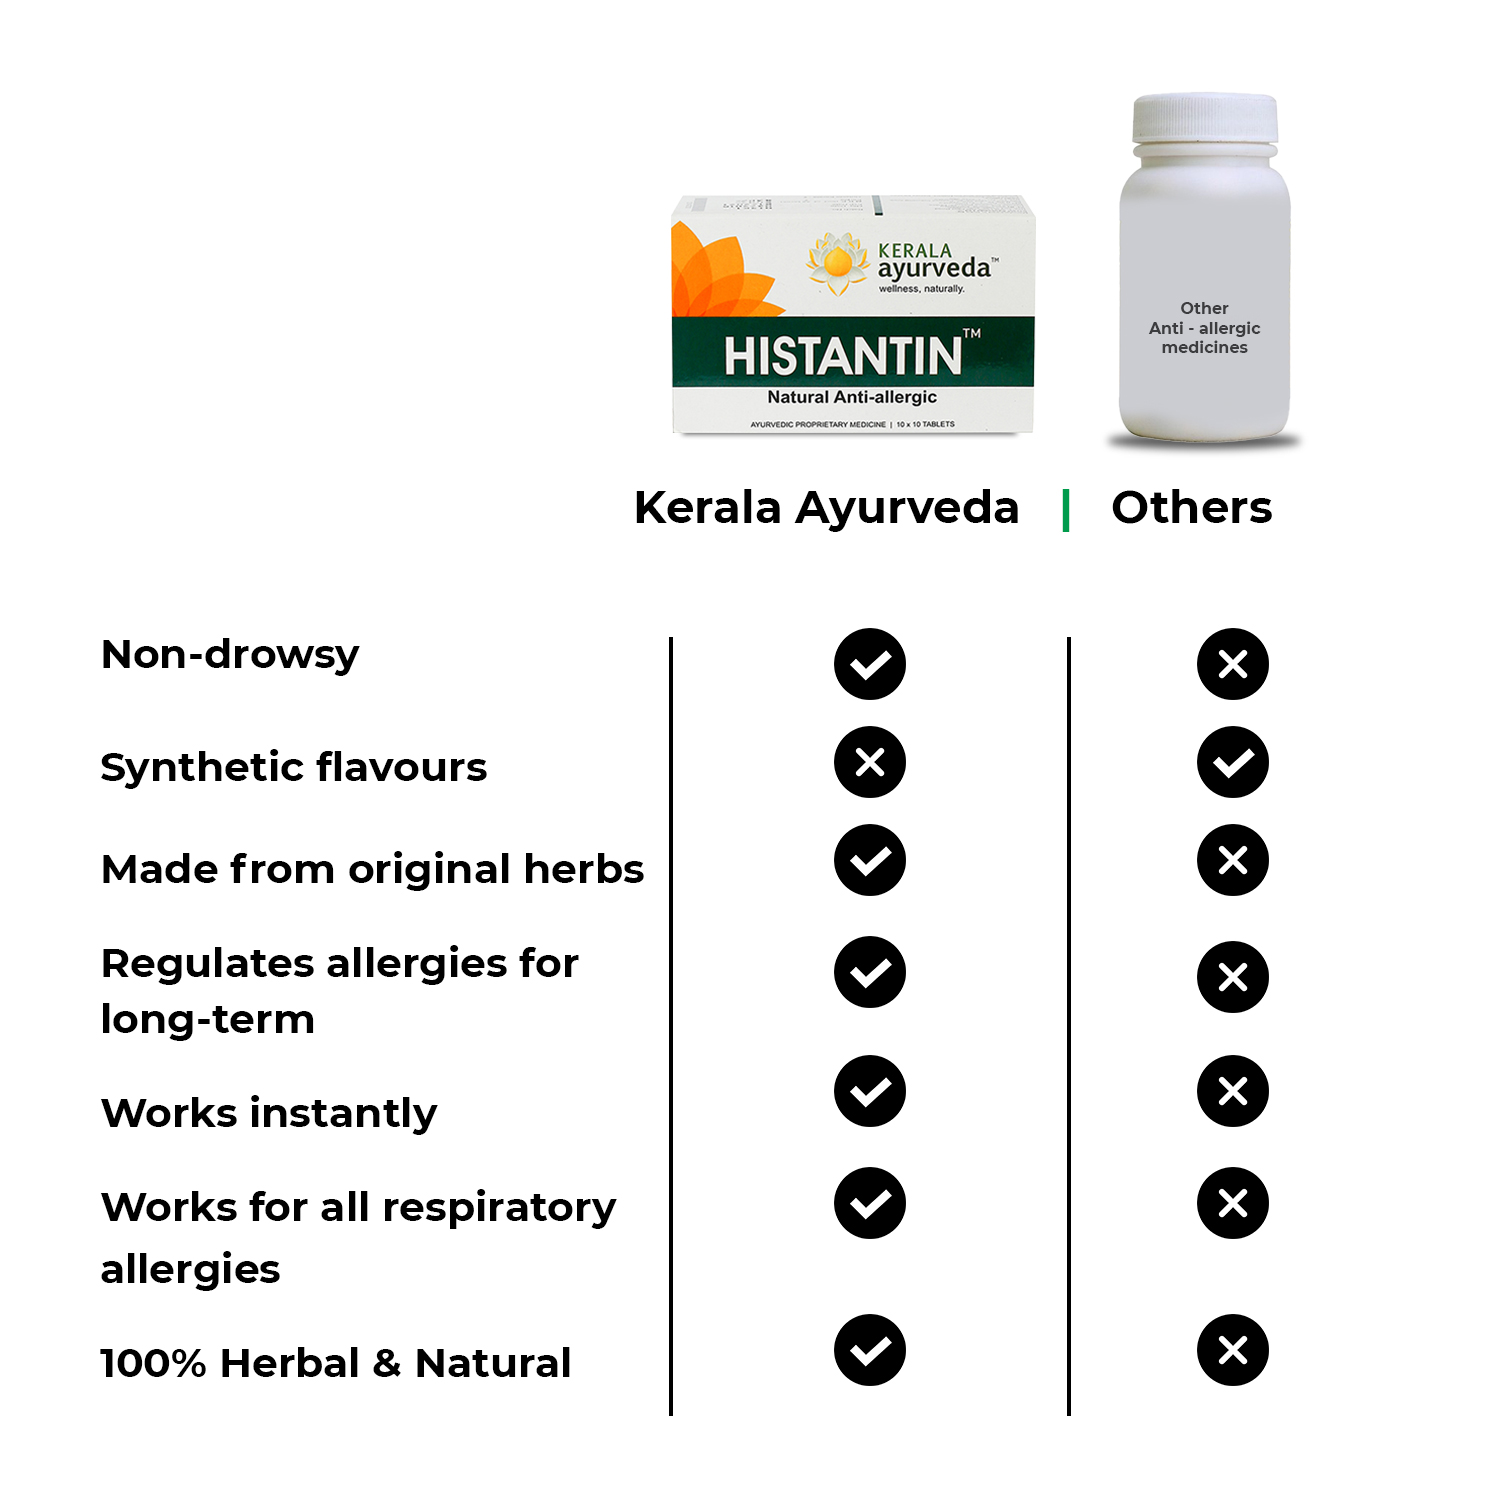 Kerala Ayurveda Limited Histantin tablet Vs Other Allergy tablets